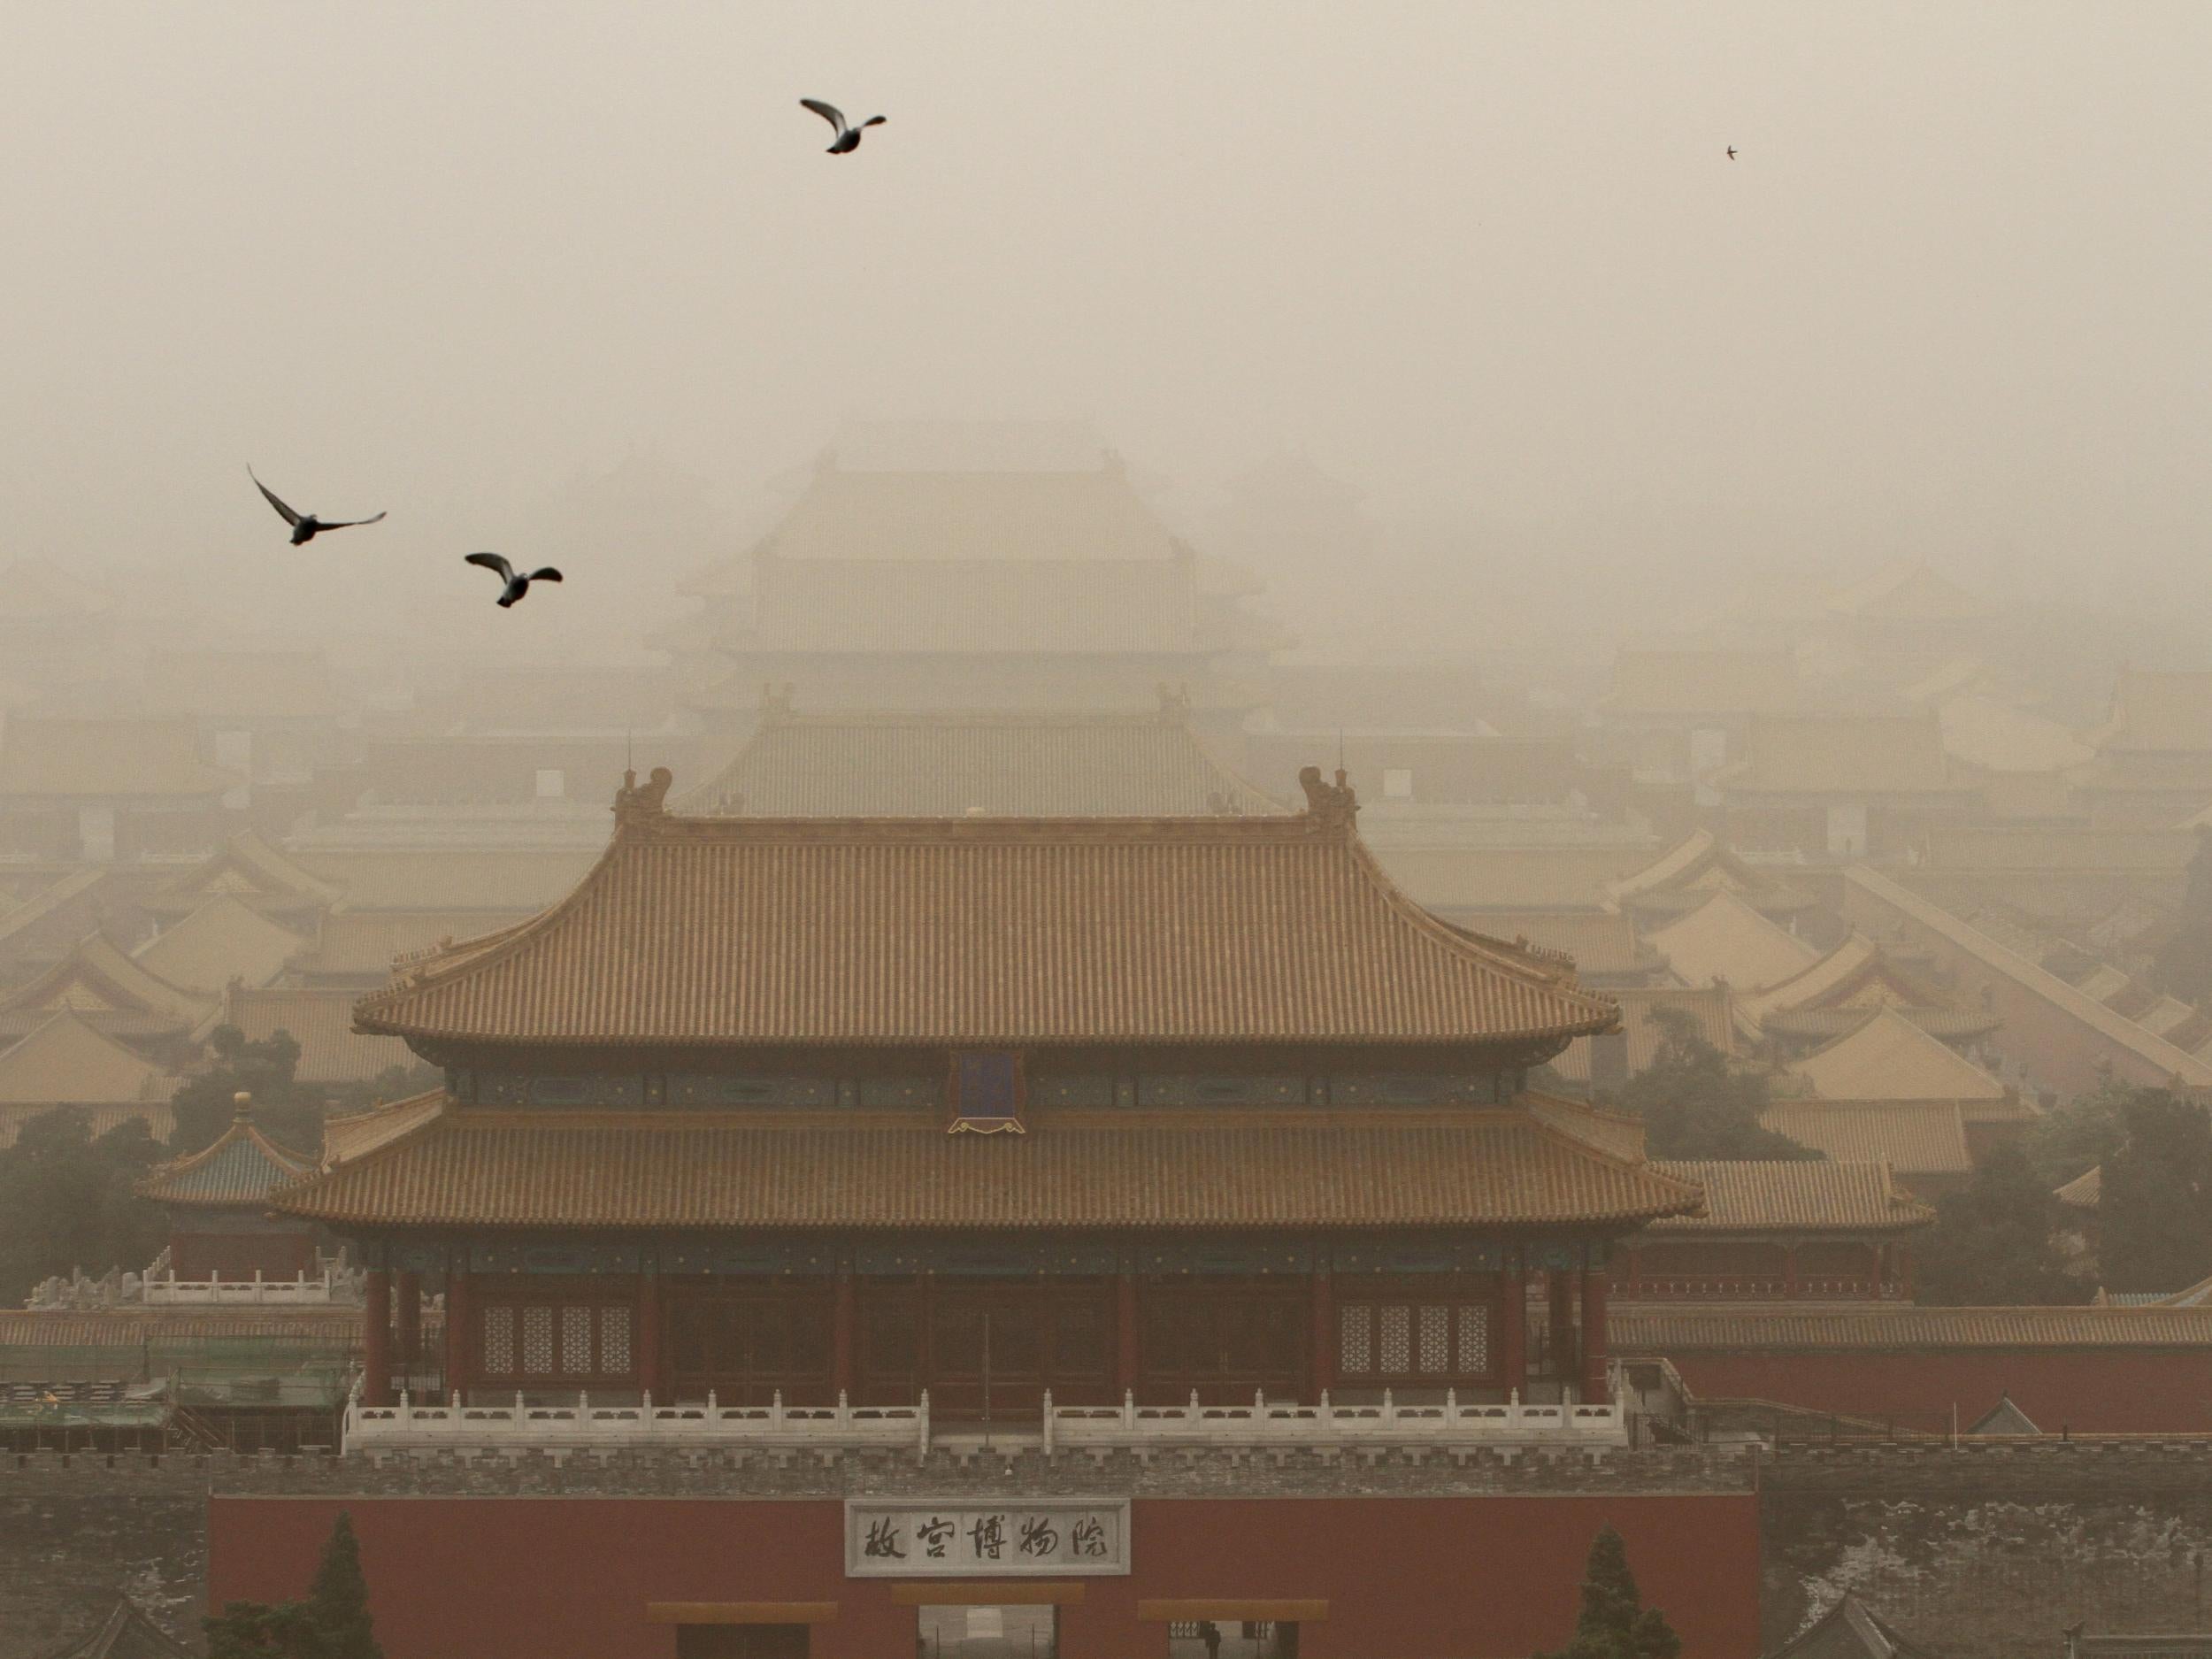 The Forbidden City is seen during a dust storm in Beijing